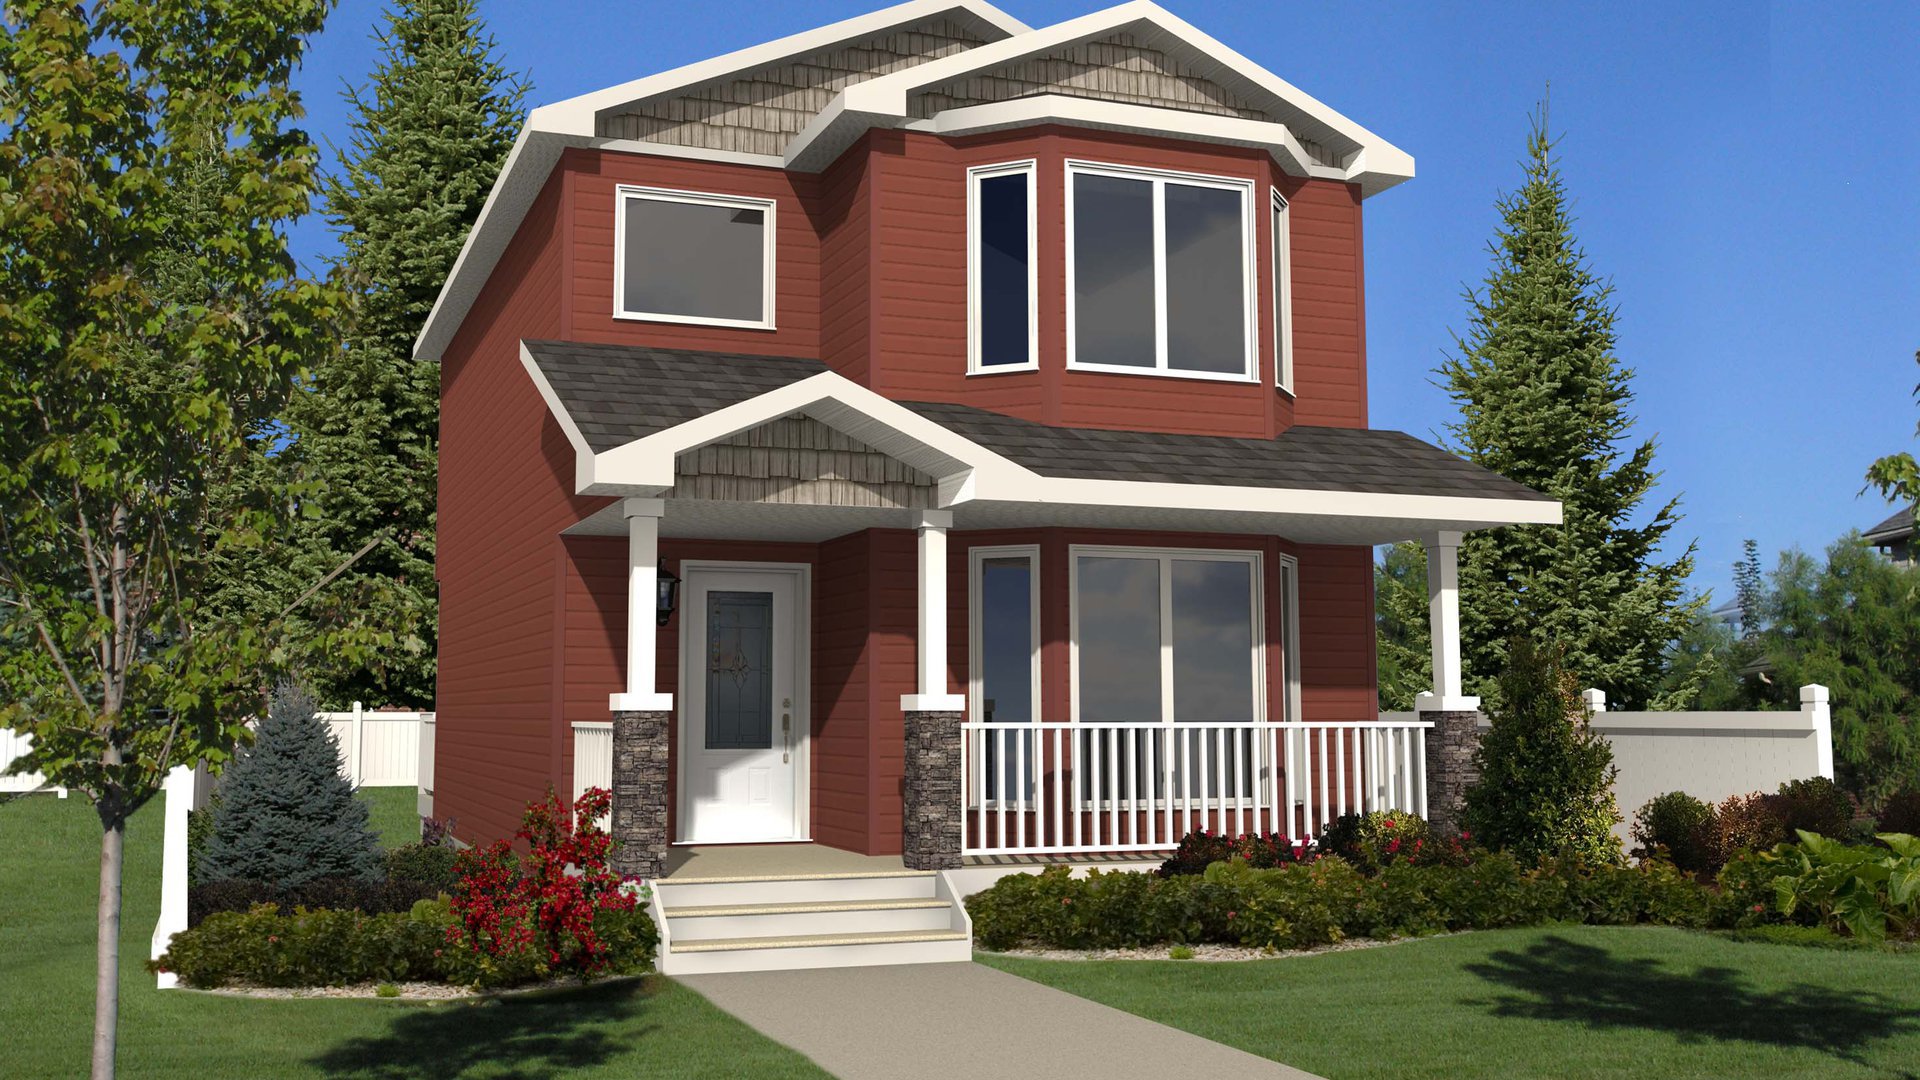 Courtney house plan modular homes prefab homes nelson homes USA.jpg